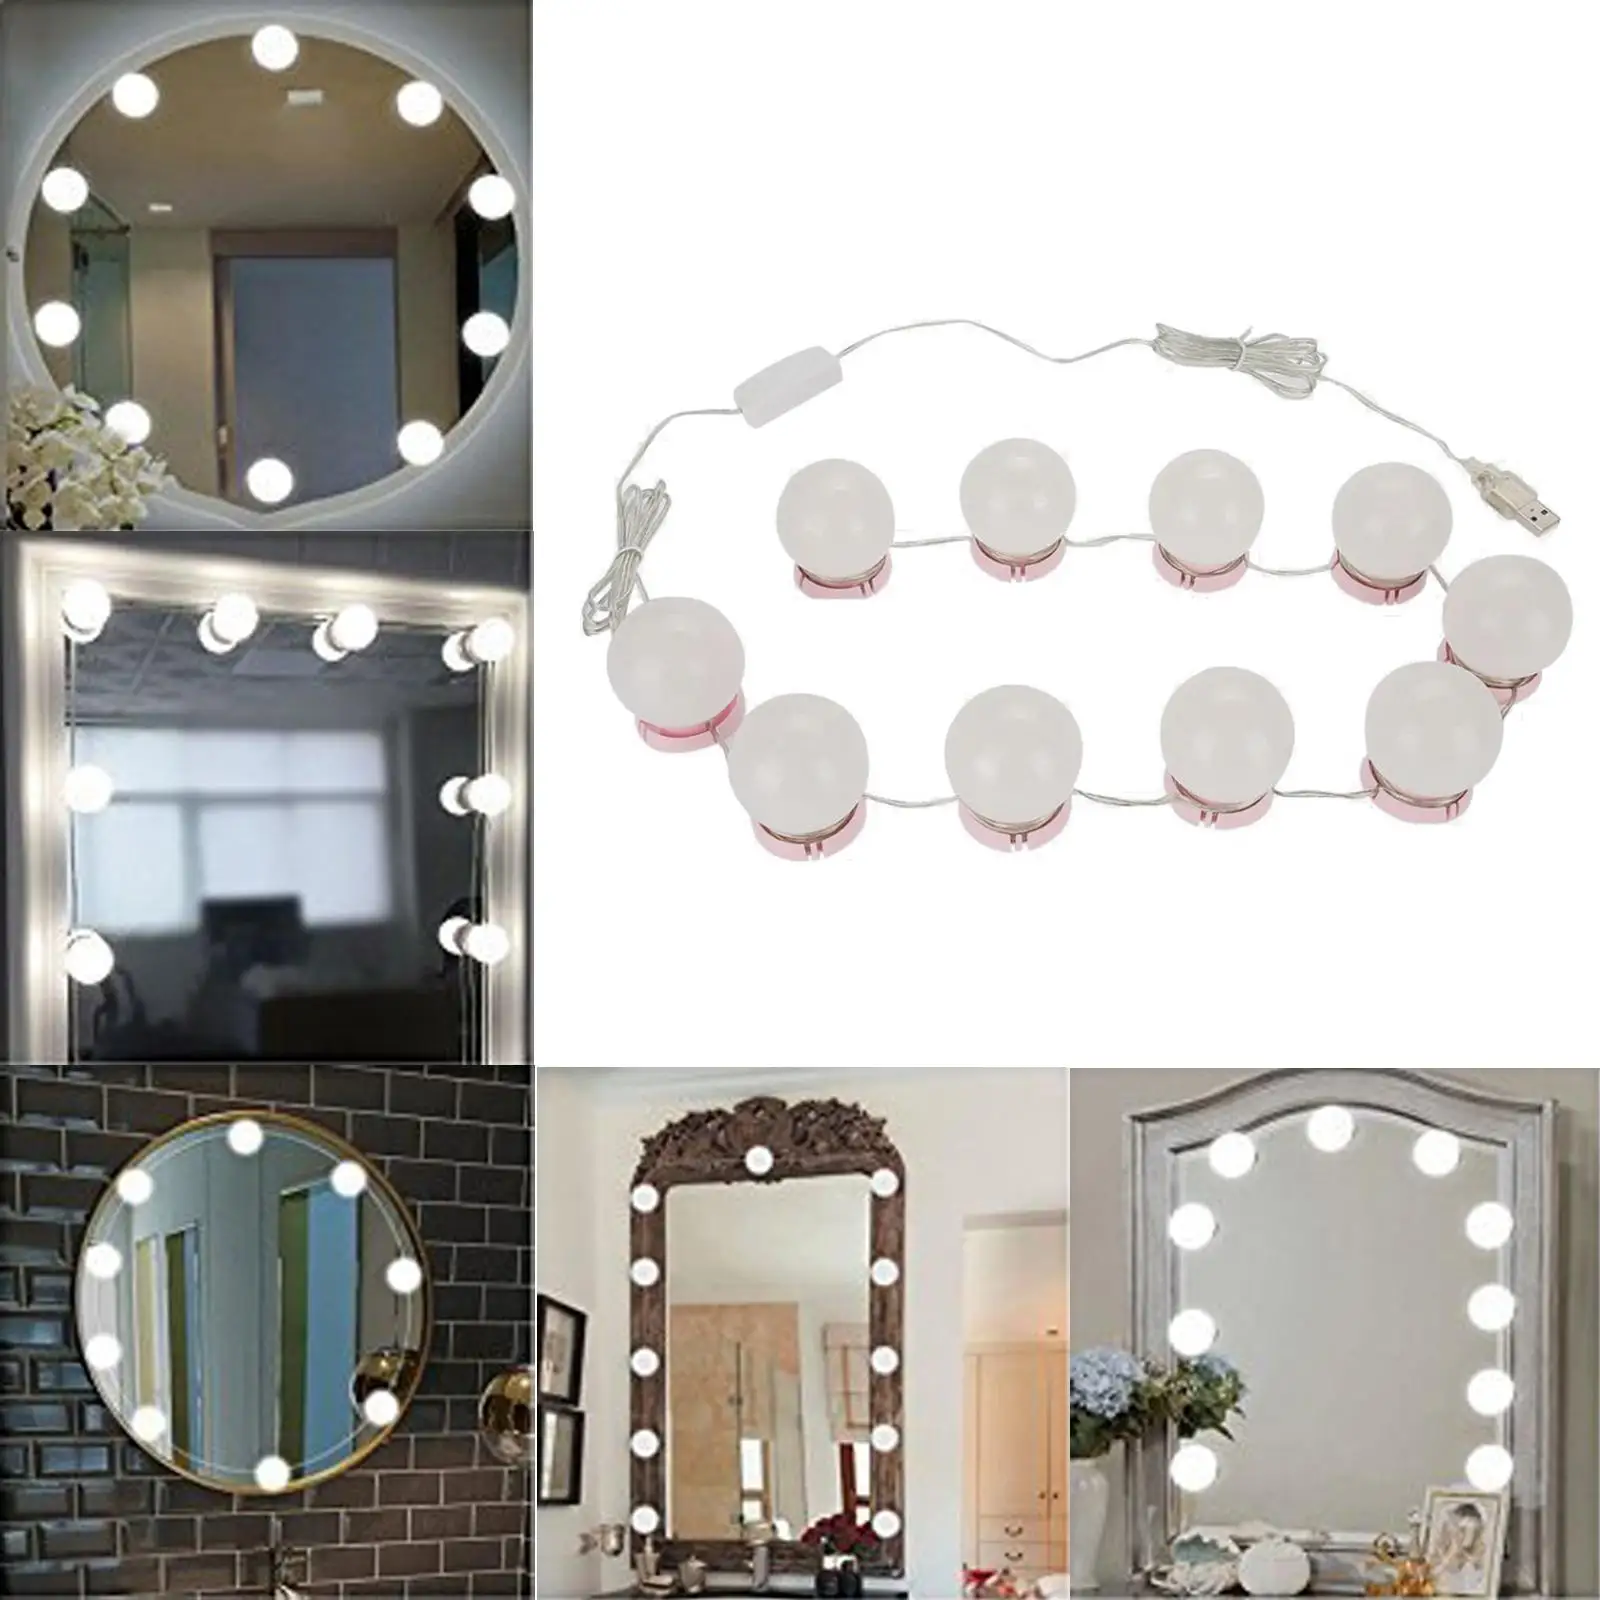 3 Colors Vanity Mirror Lights Kit Professional Detachable Dimmable Bright Vanity Mirror Lights for Dressing Room Restroom Decor